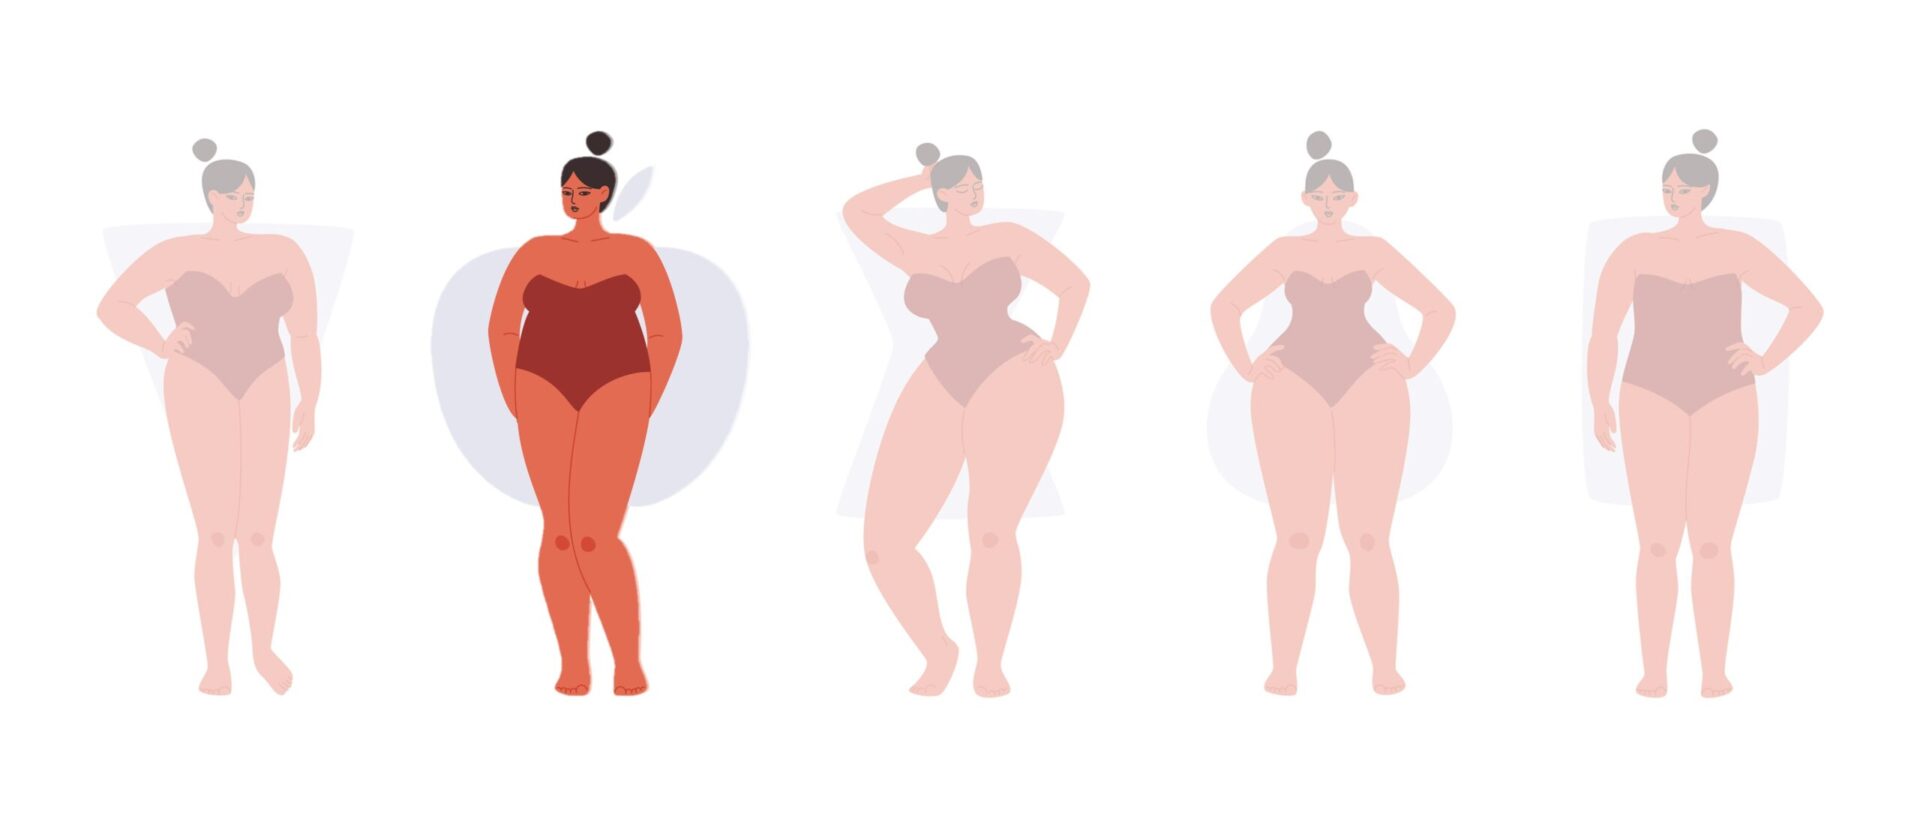 apple body types